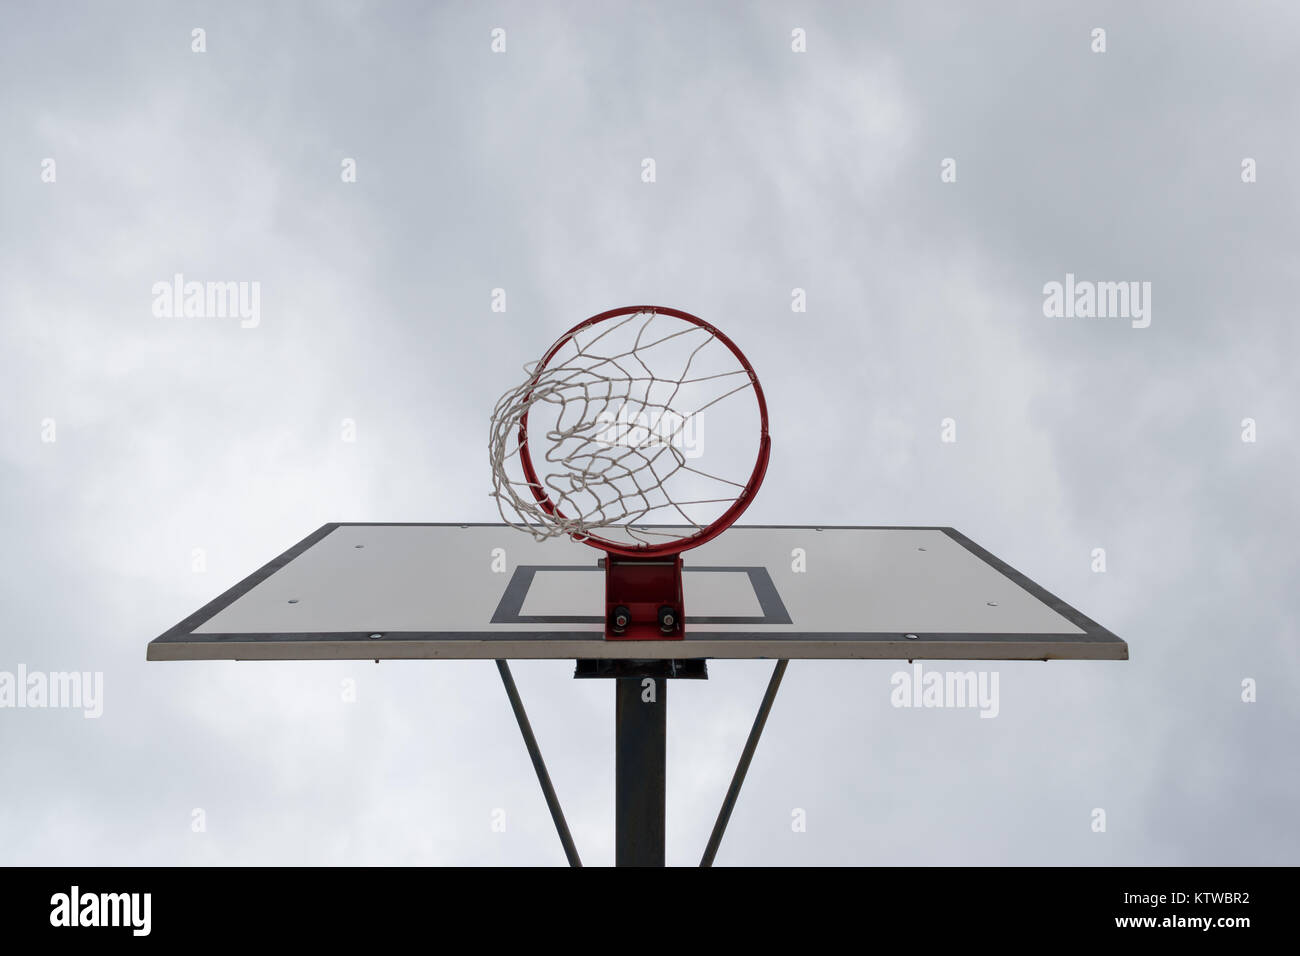 Basketballkorb, Korb gegen Weiße bewölkten Himmel. Außerhalb, street Basketball Court. Stockfoto